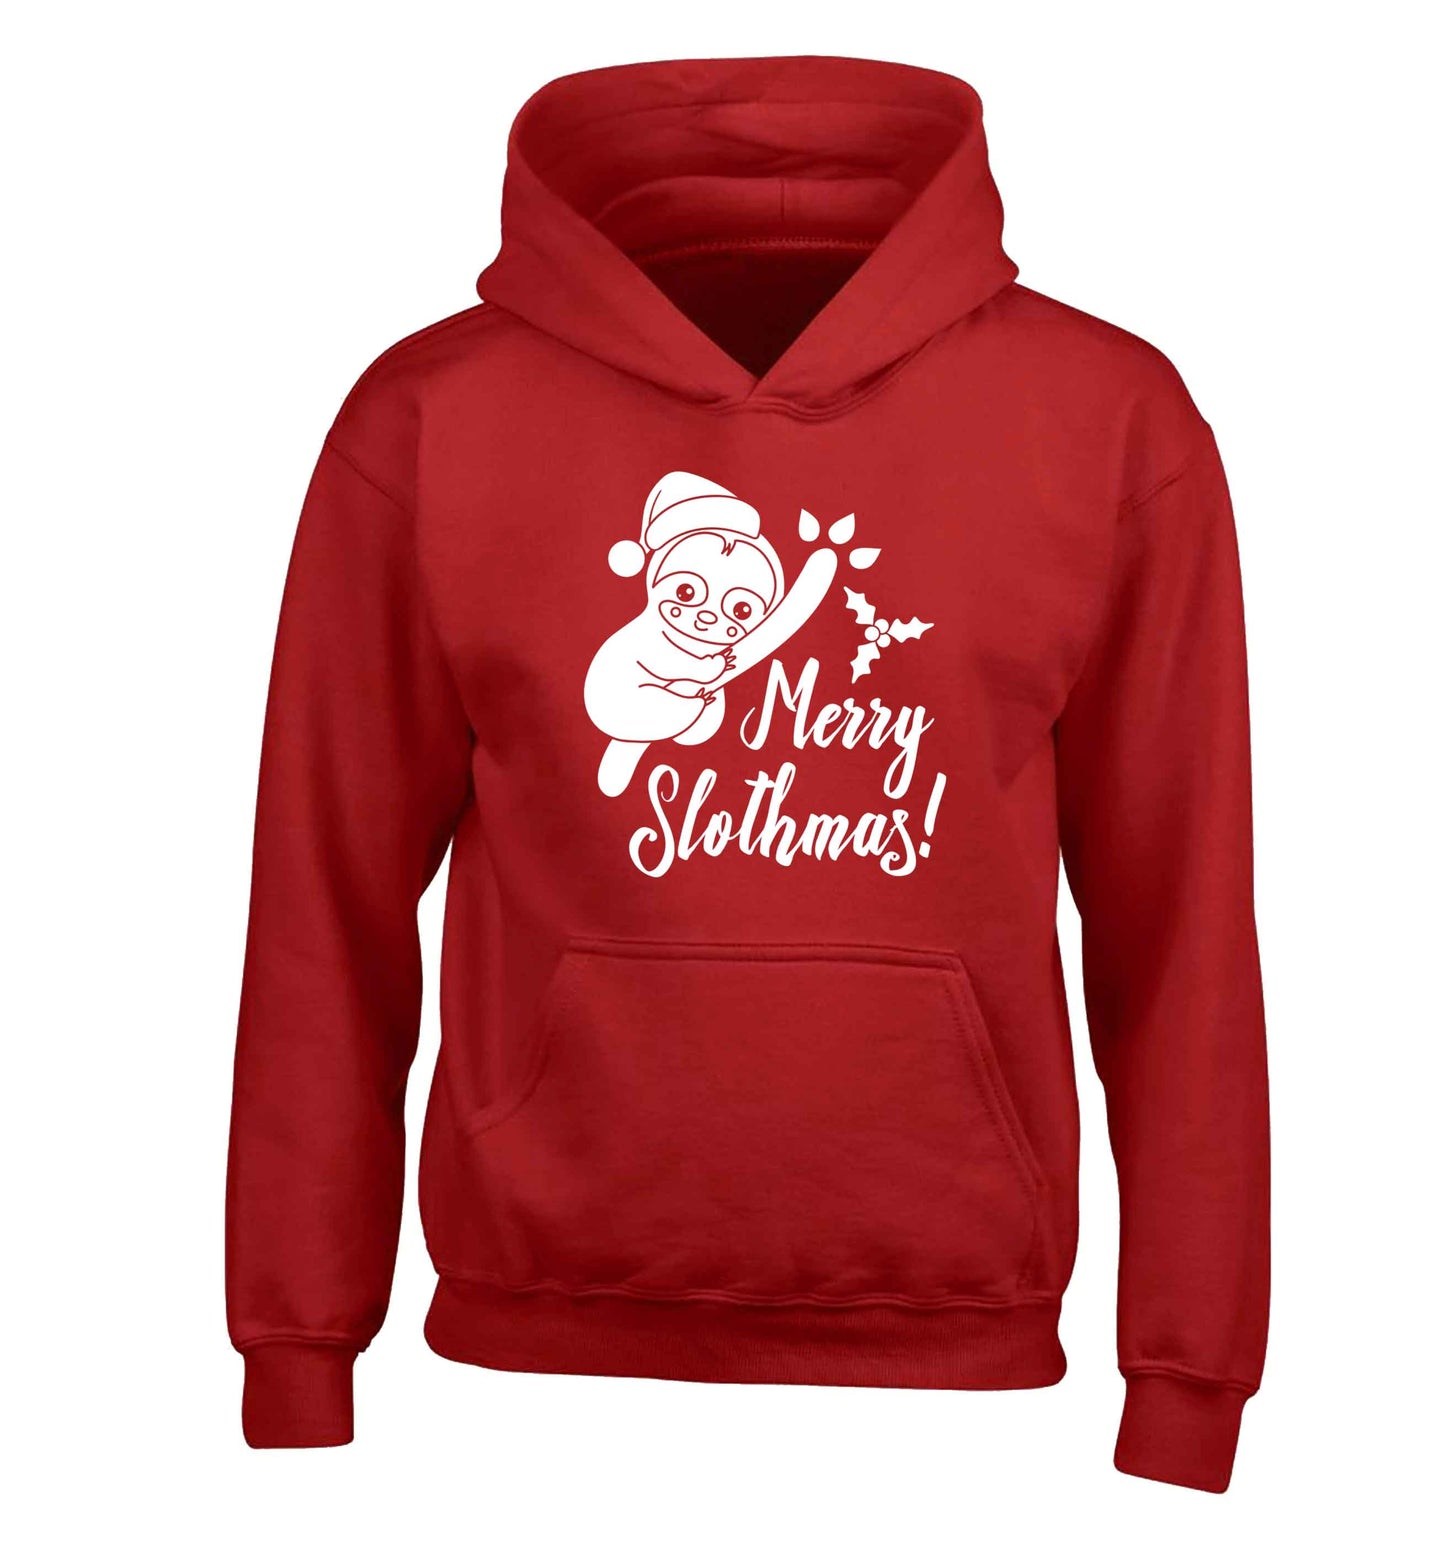 Merry Slothmas children's red hoodie 12-13 Years